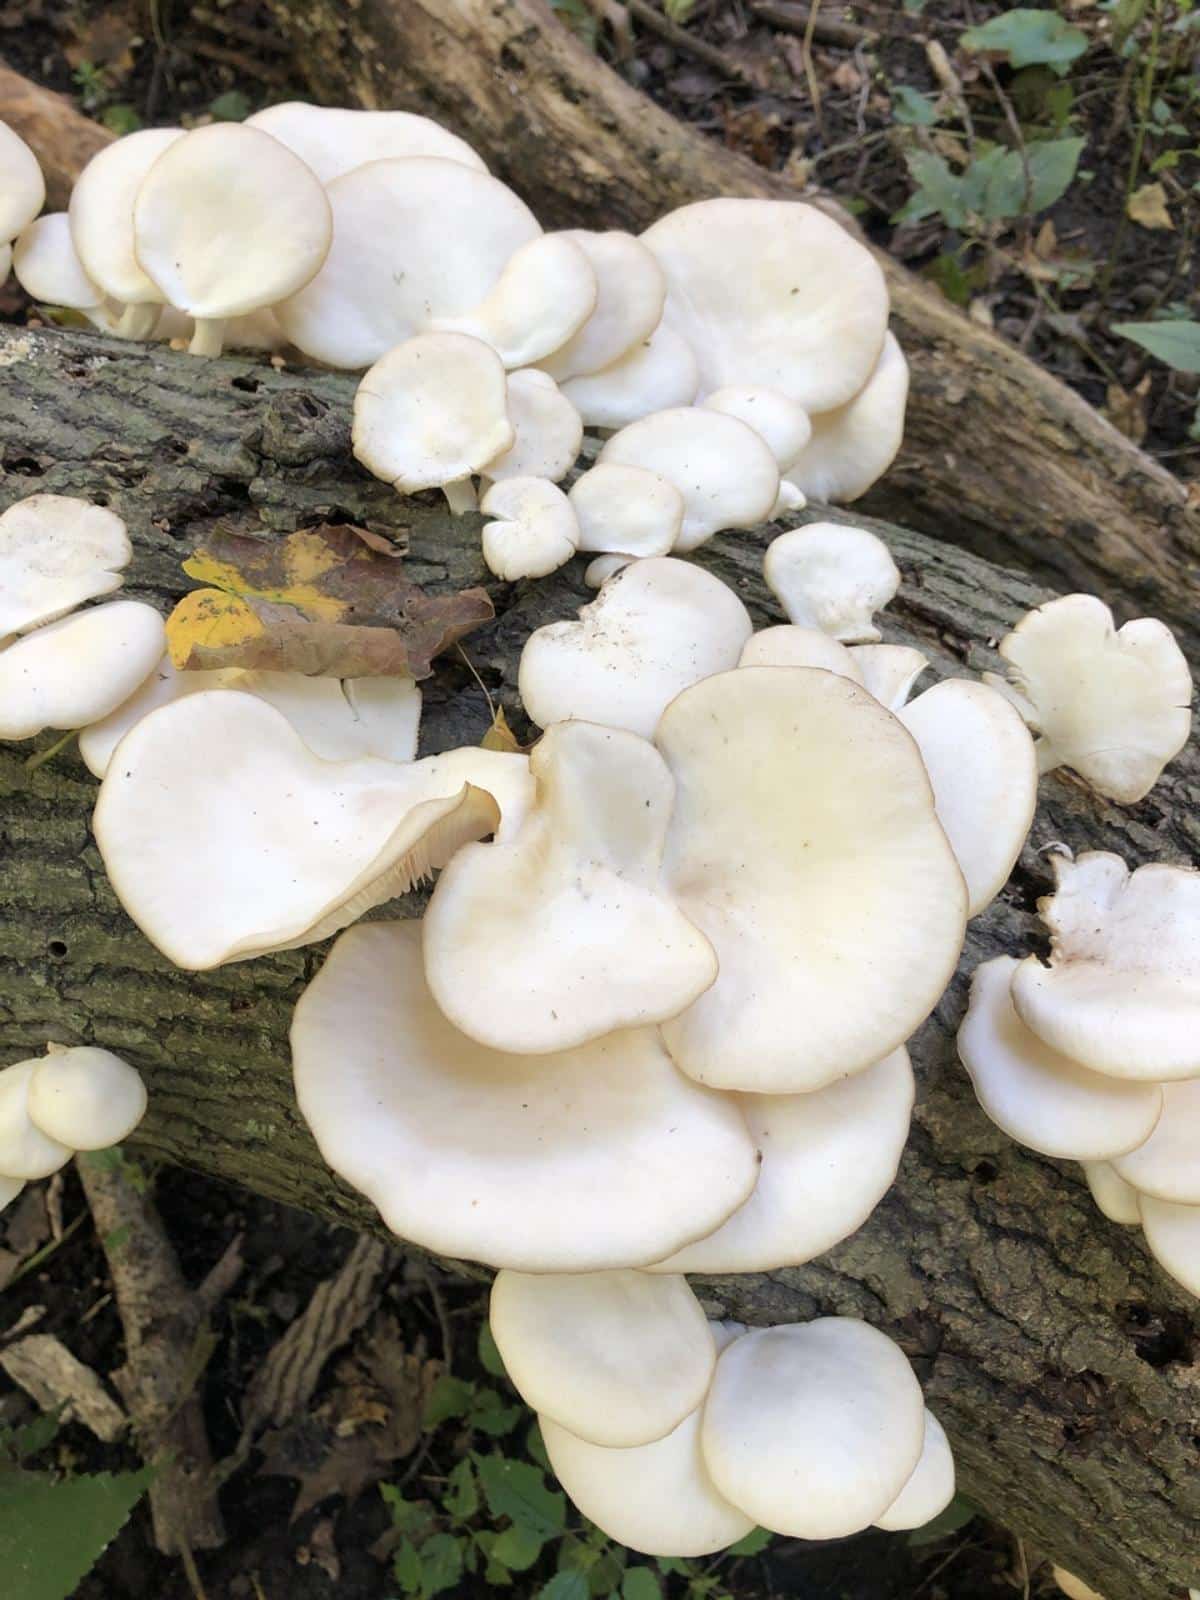 Phoenix oyster mushroom